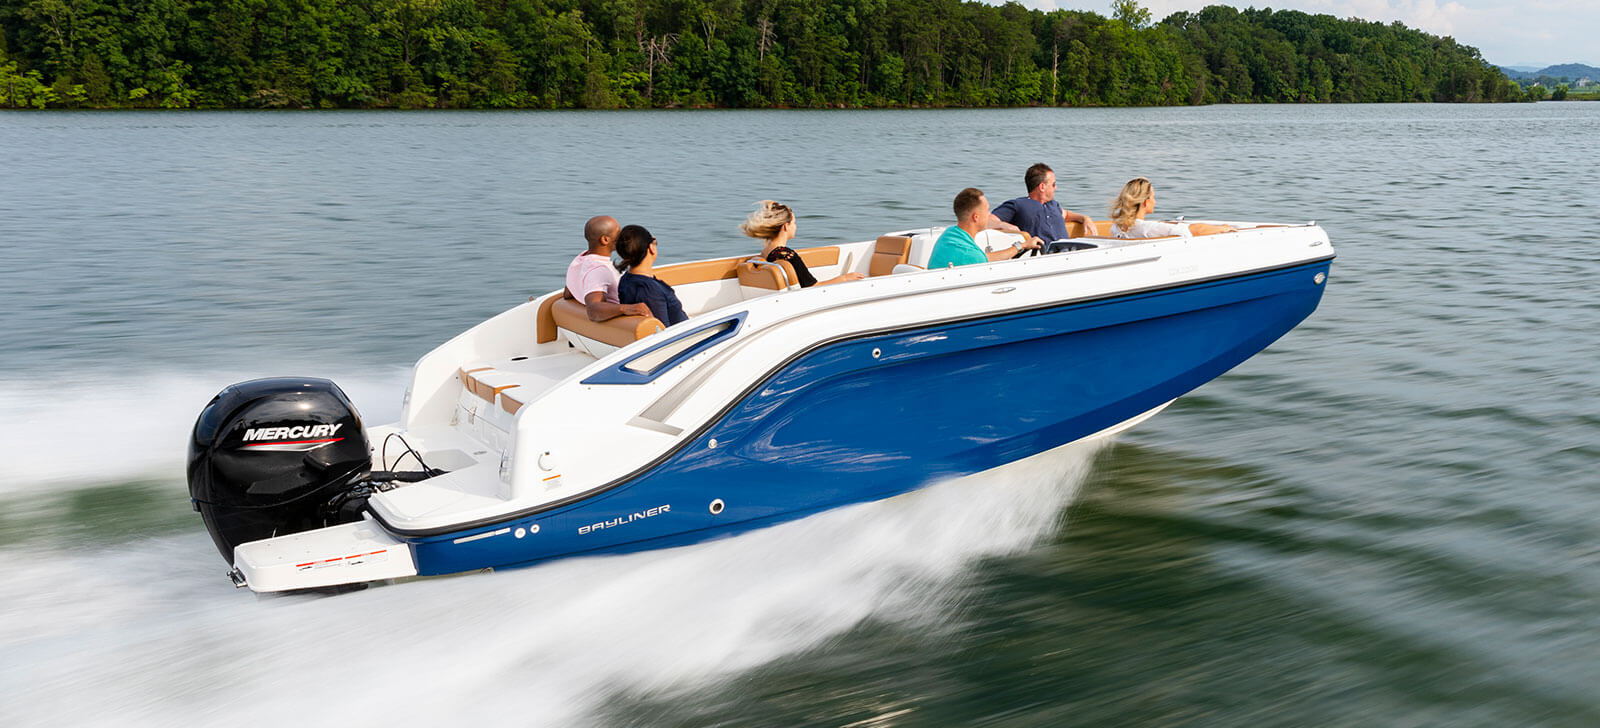 Hamptons Bachelorette Party Boat 22' Bayliner